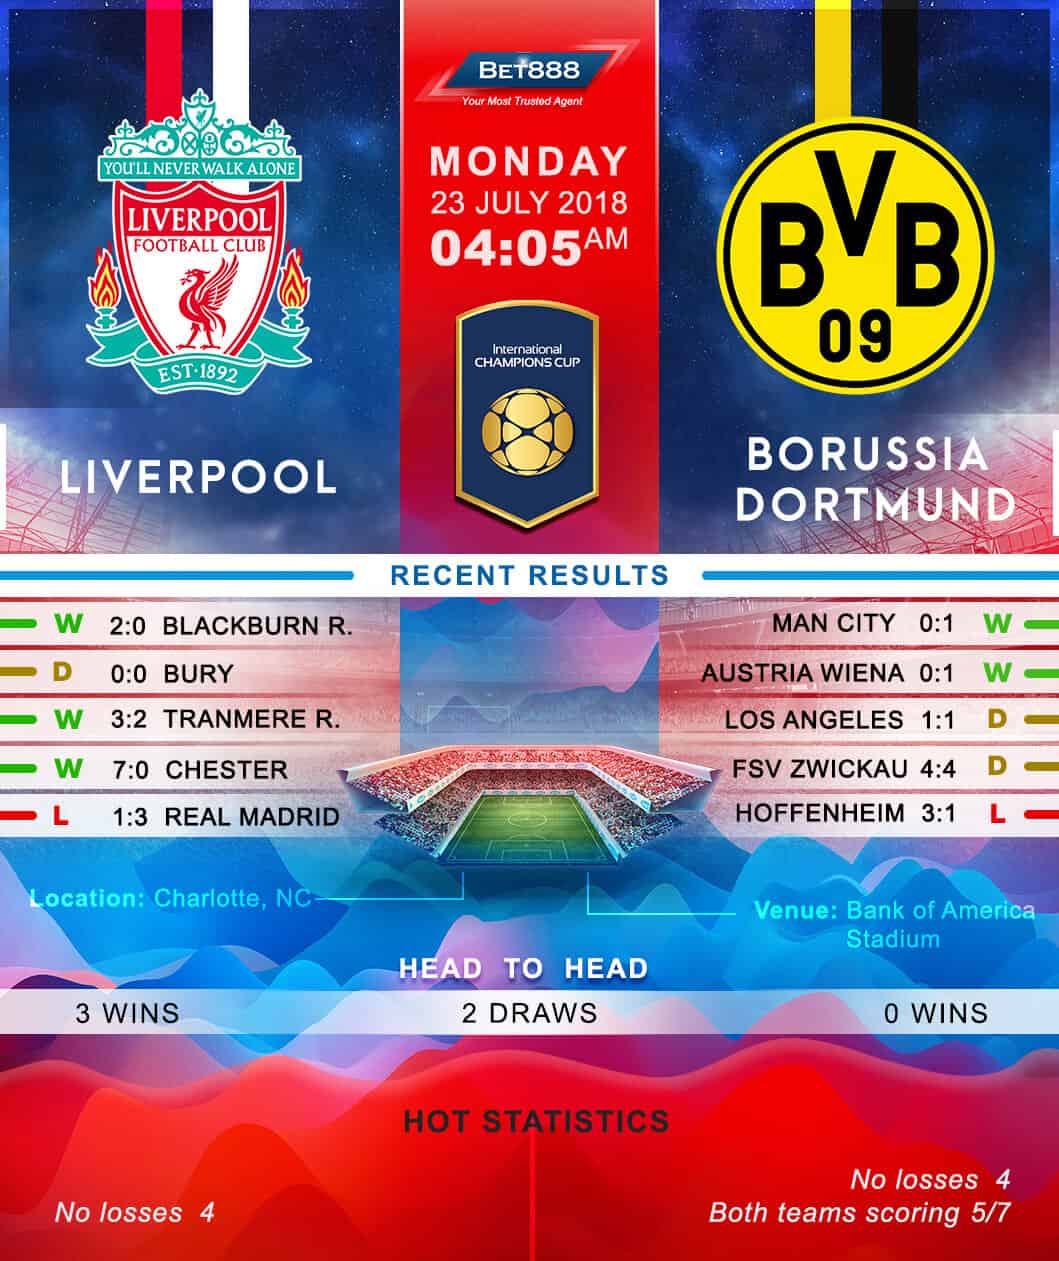 Liverpool vs Borussia Dortmund 23/07/18